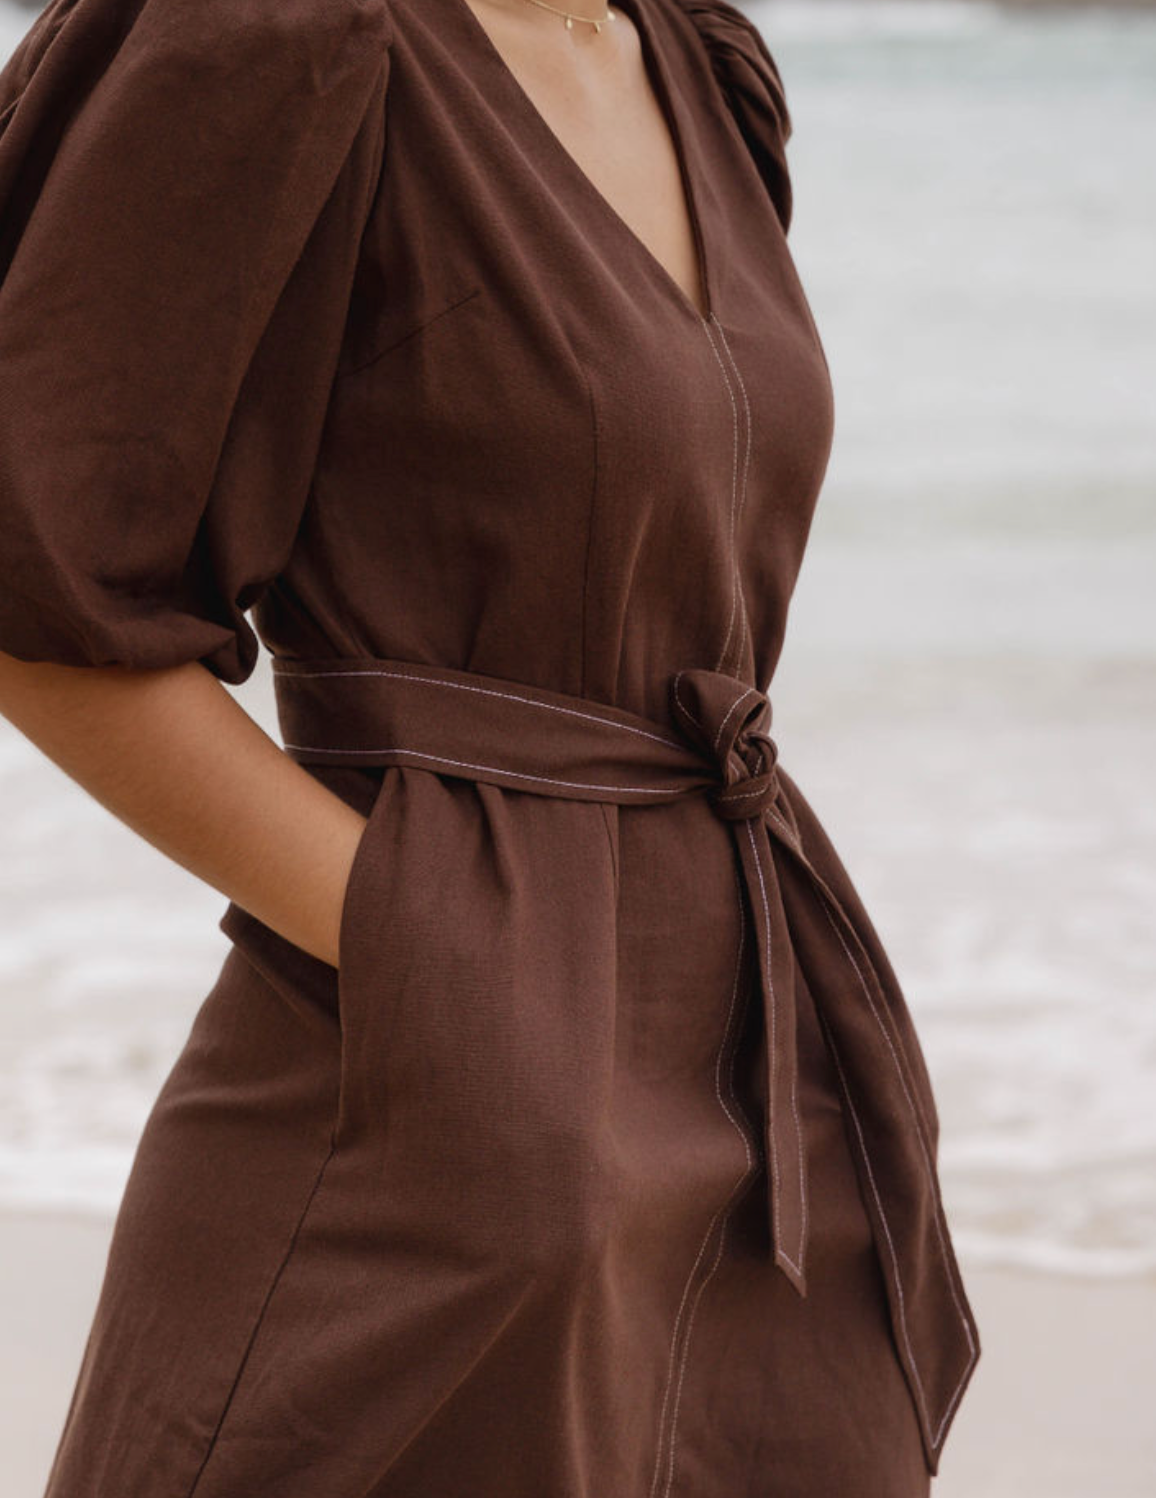 Puff sleeve brown midi dress with v-neckline and waist tie